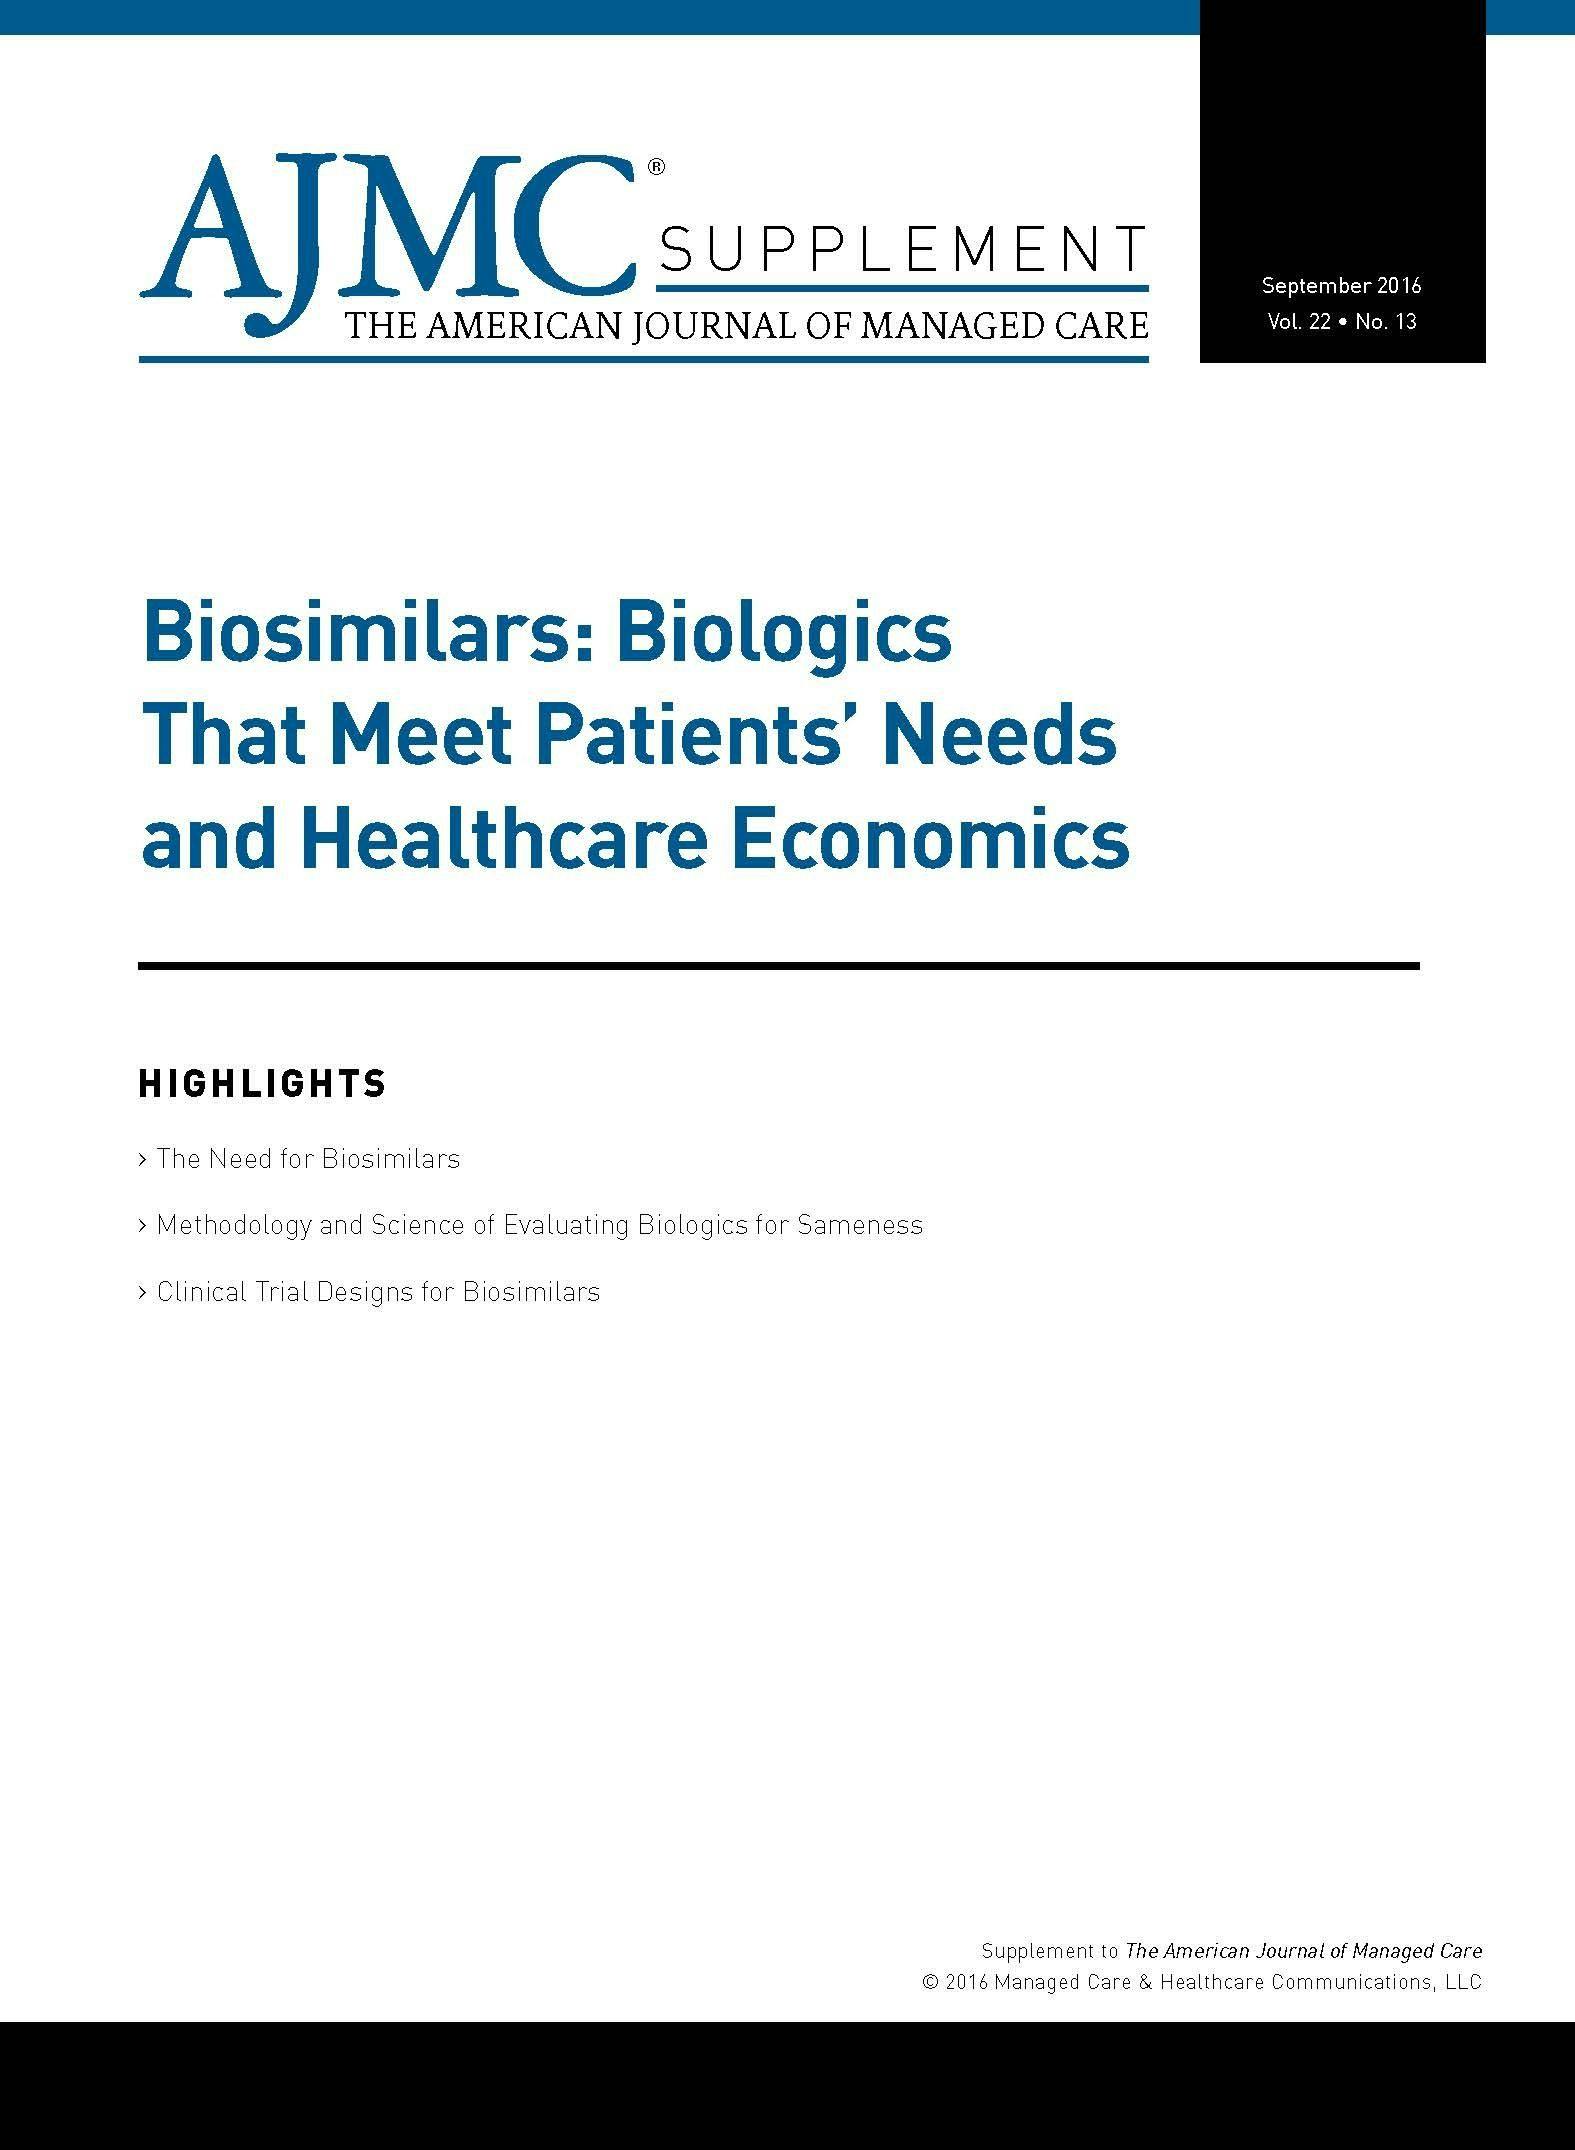 Biosimilars: Biologics That Meet Patients' Needs and Healthcare Economics